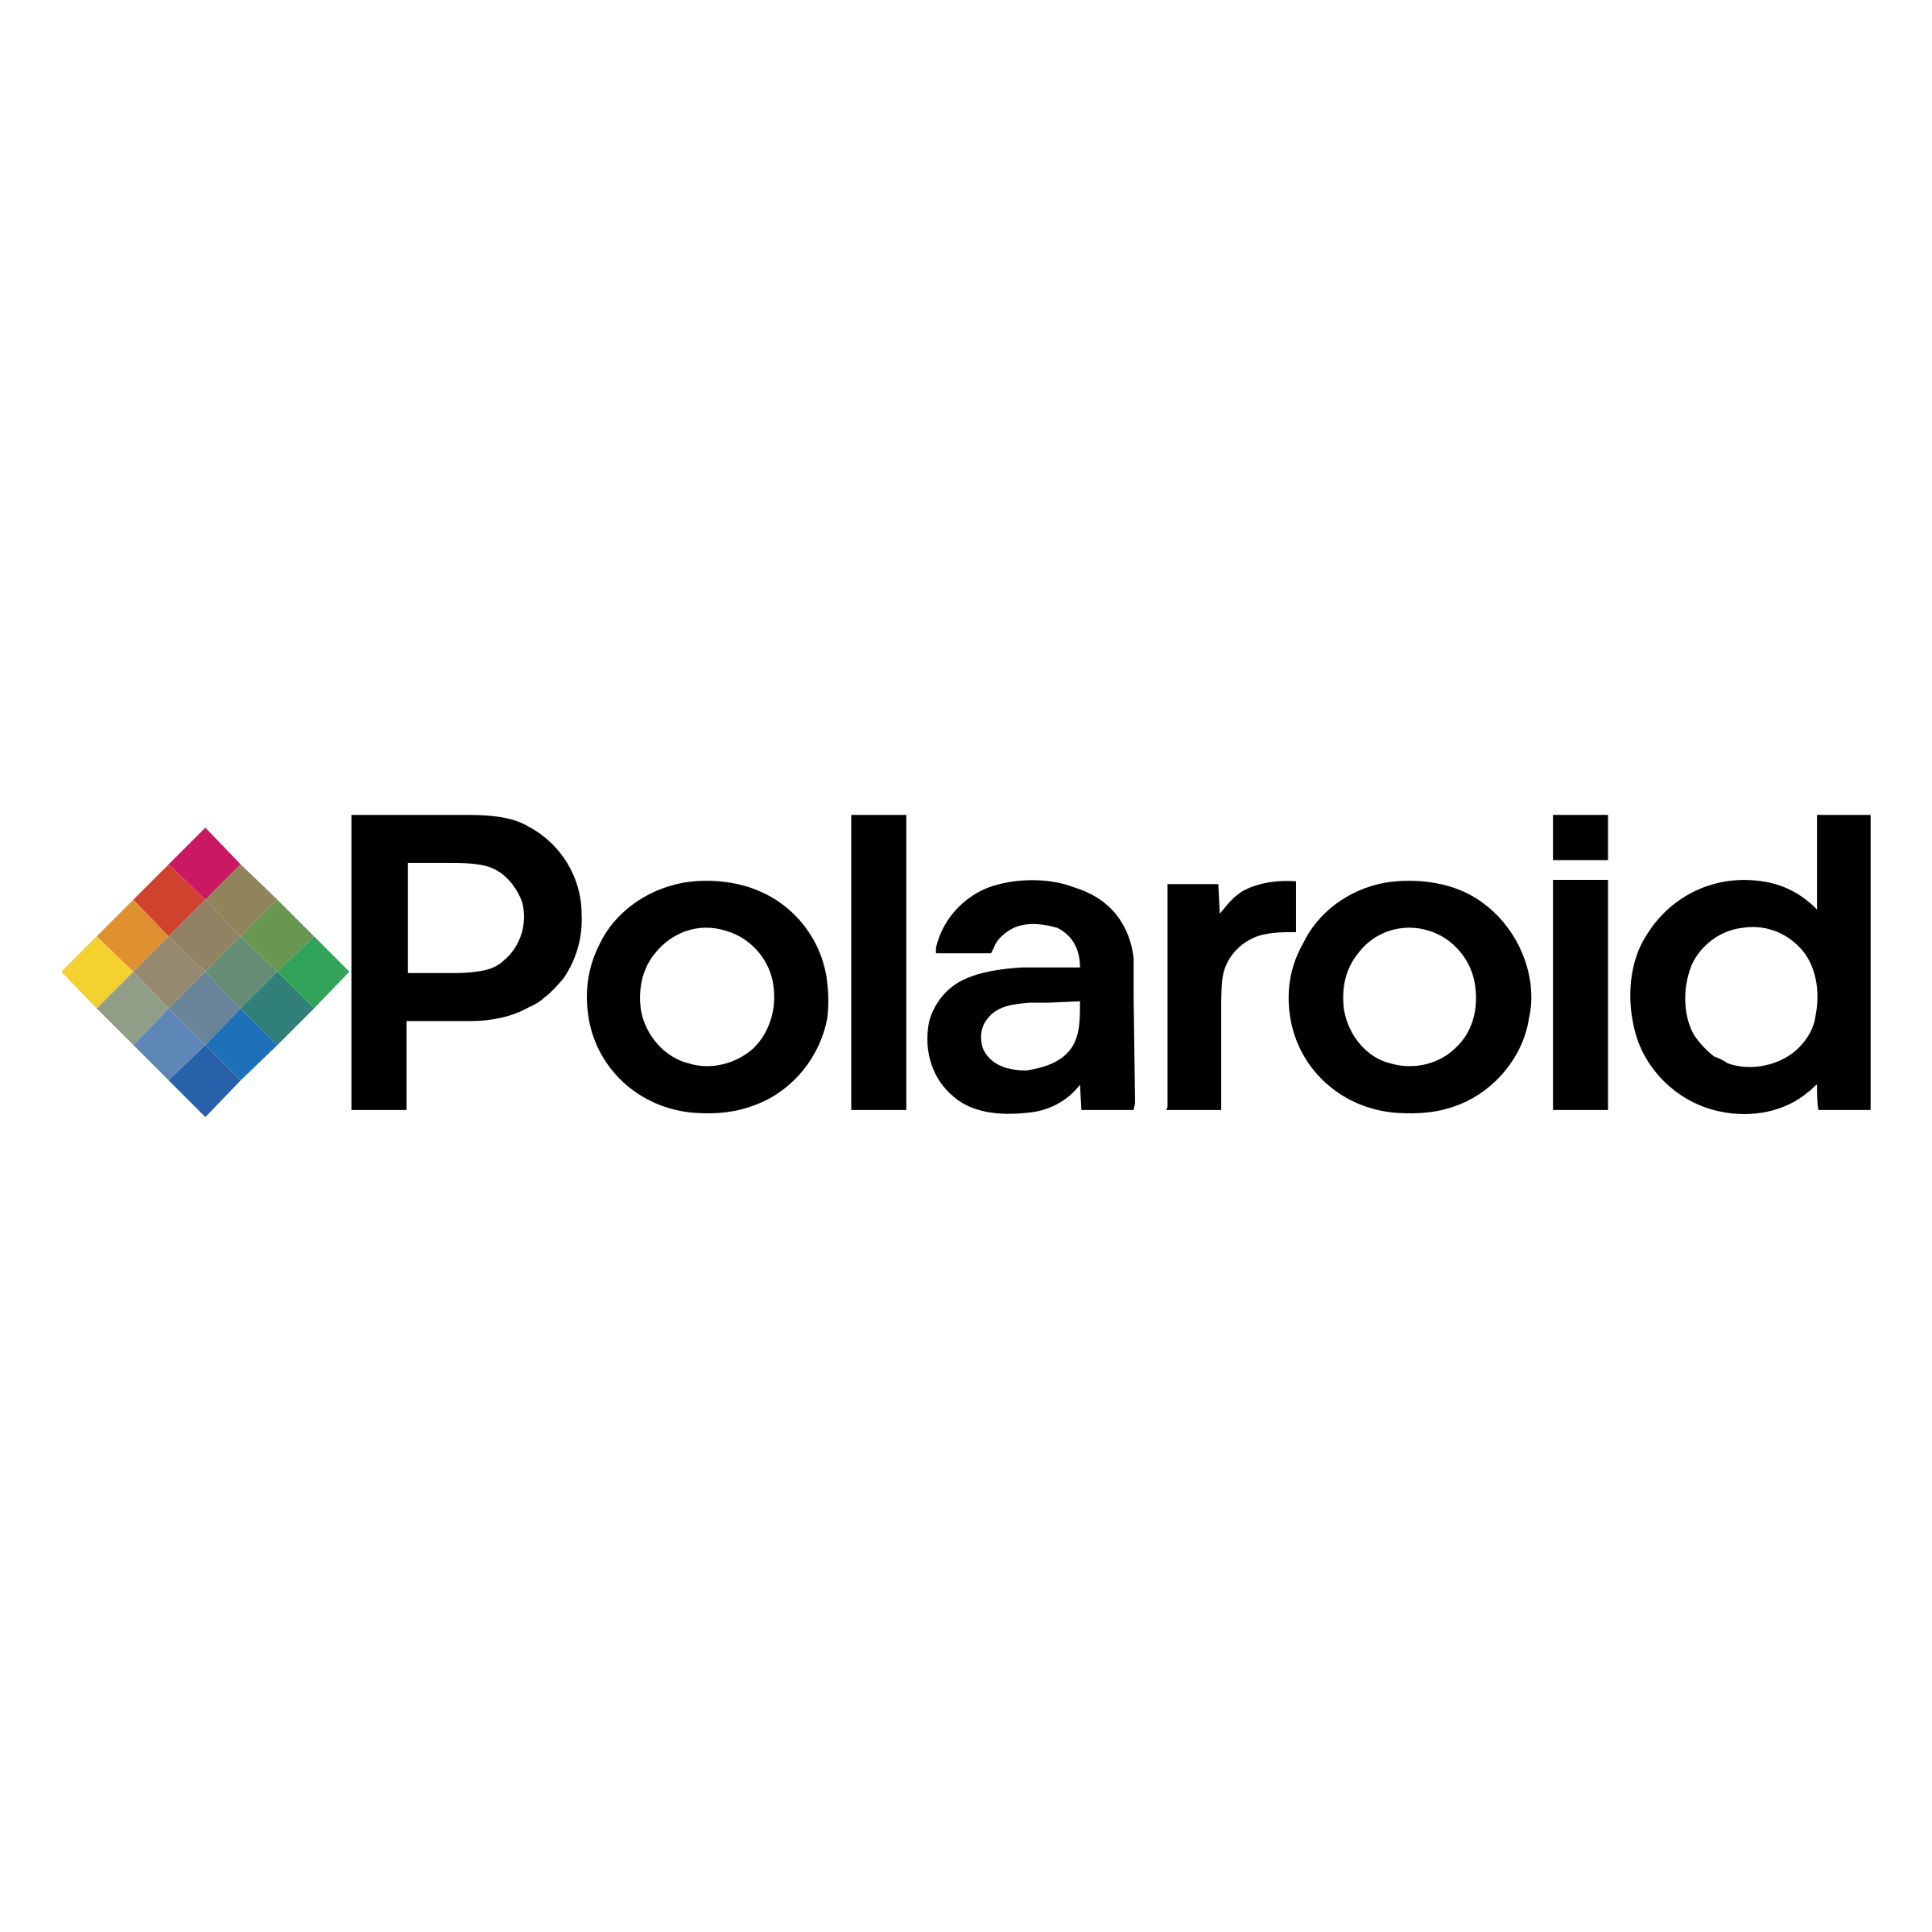 Polaroid Logo - Polaroid Logo PNG Transparent & SVG Vector